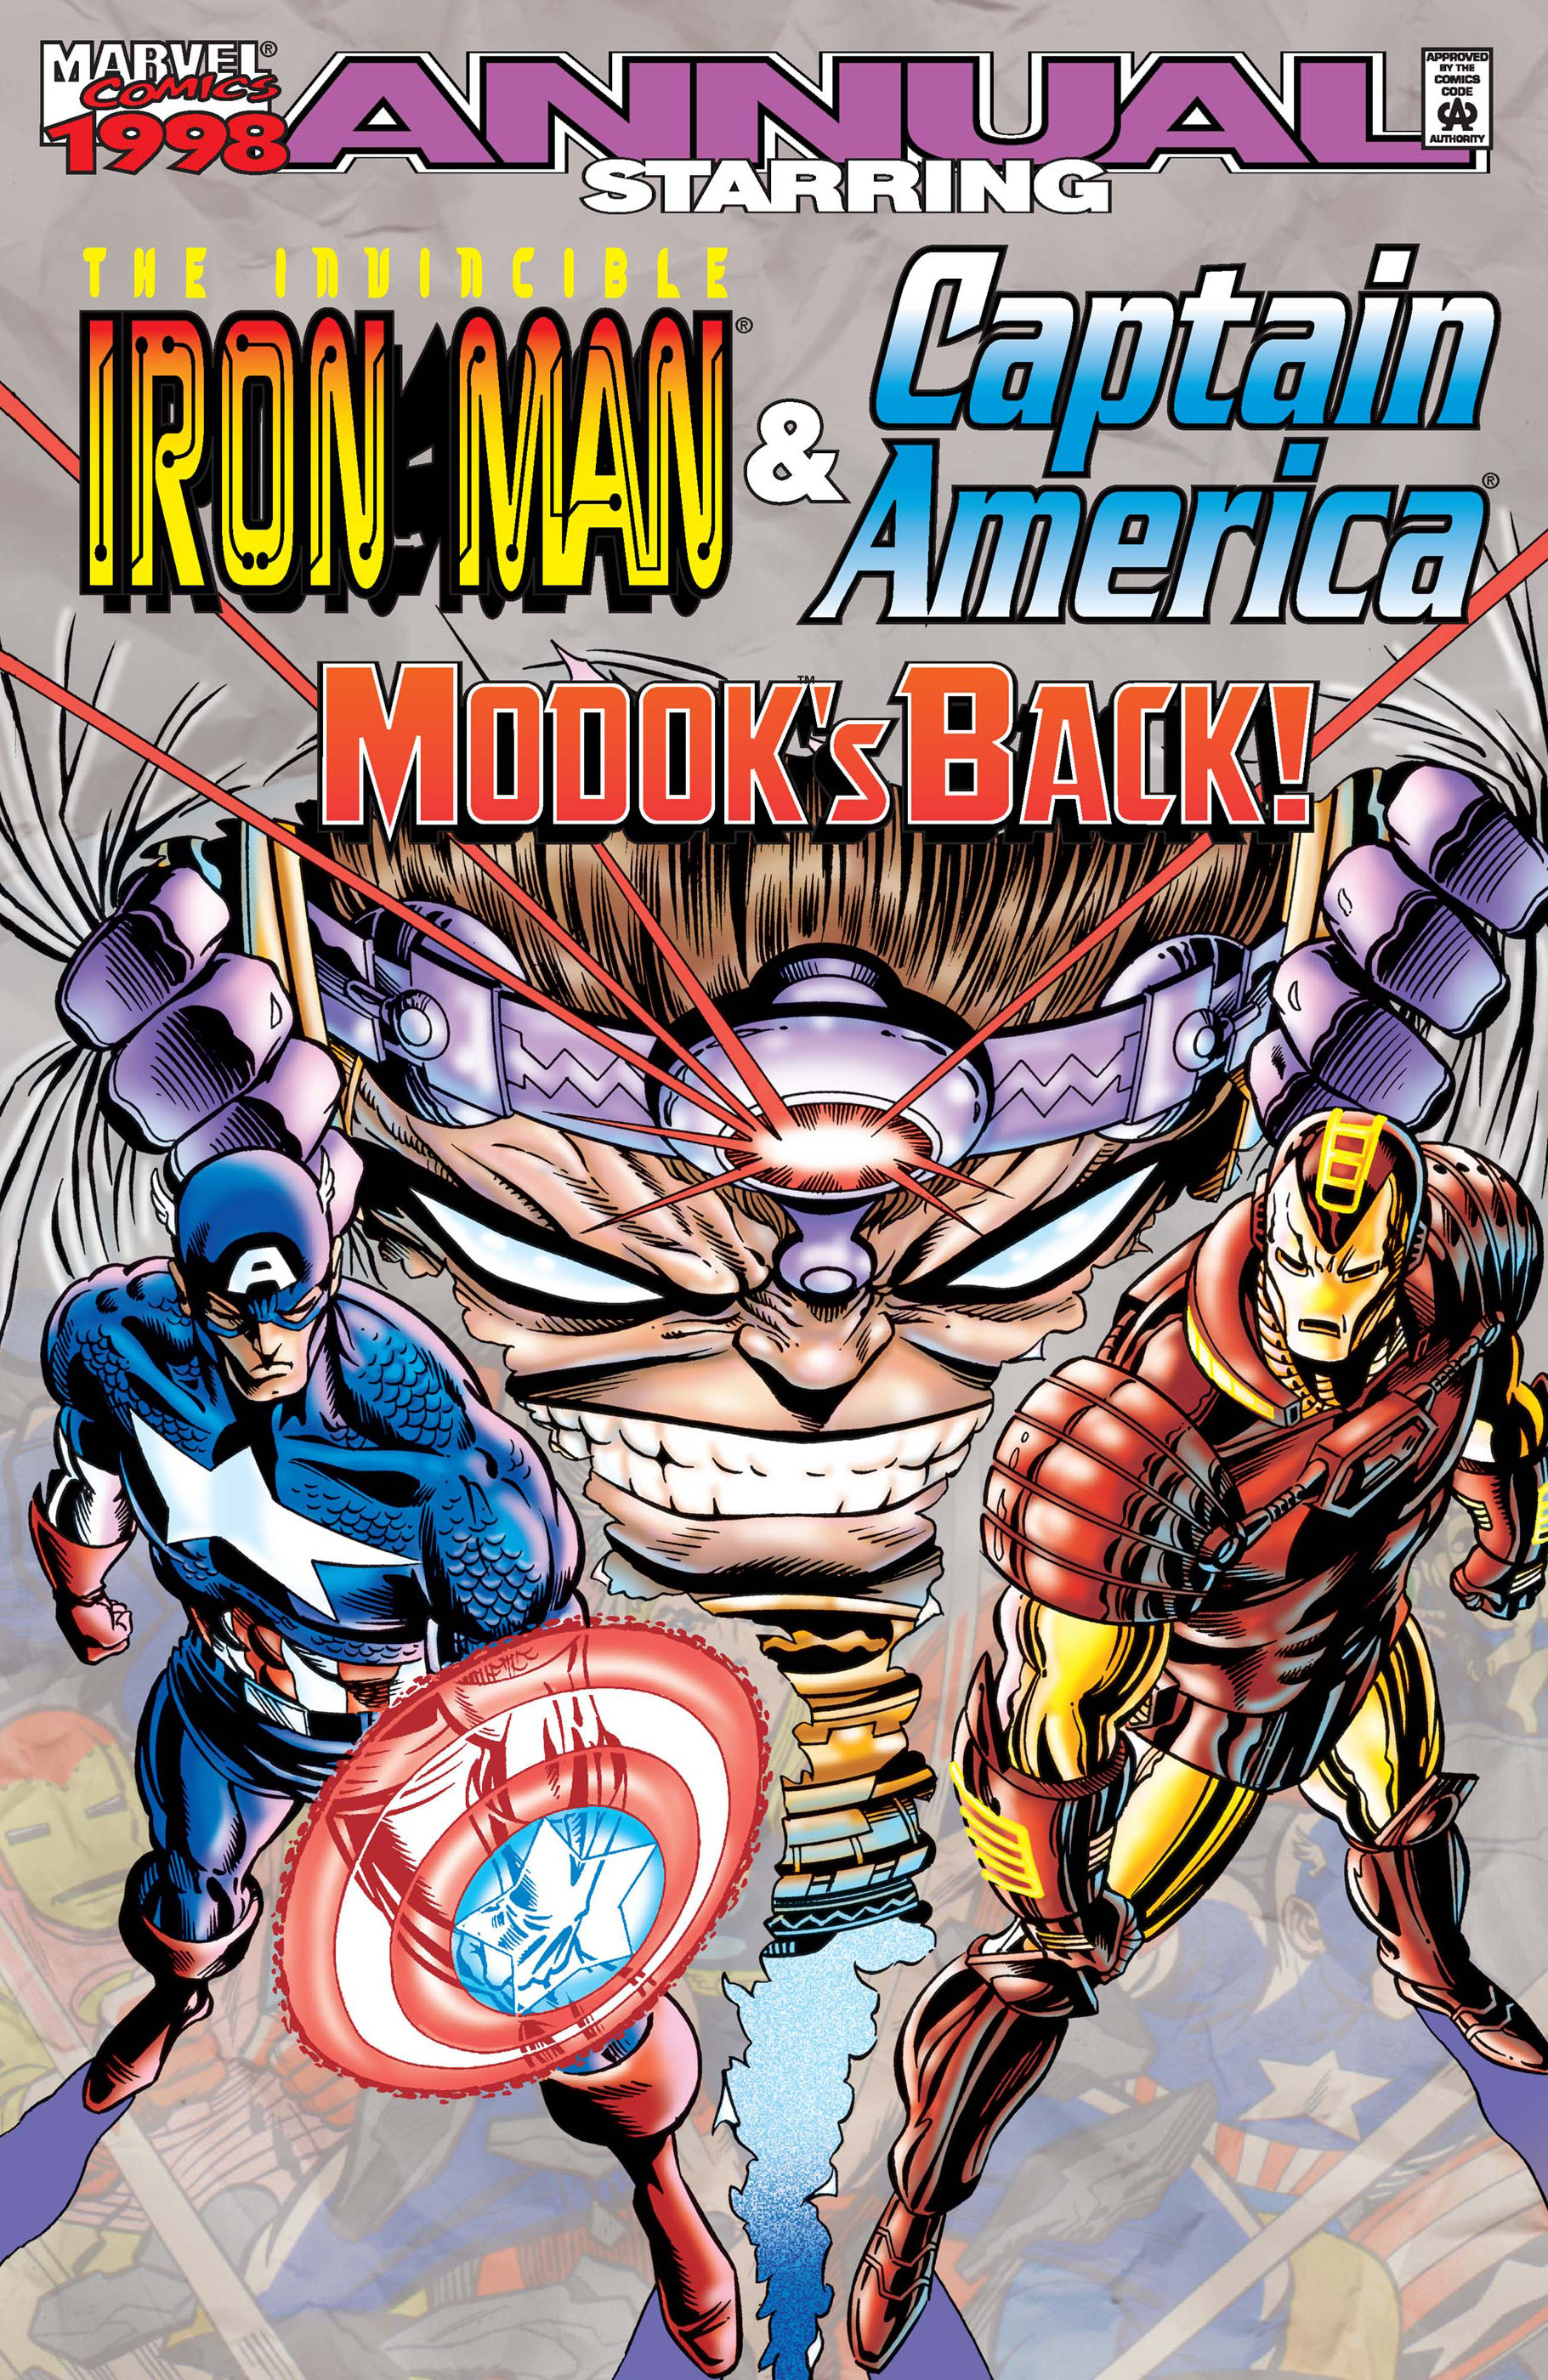 Iron Man & Captain America Annual (1998) #1